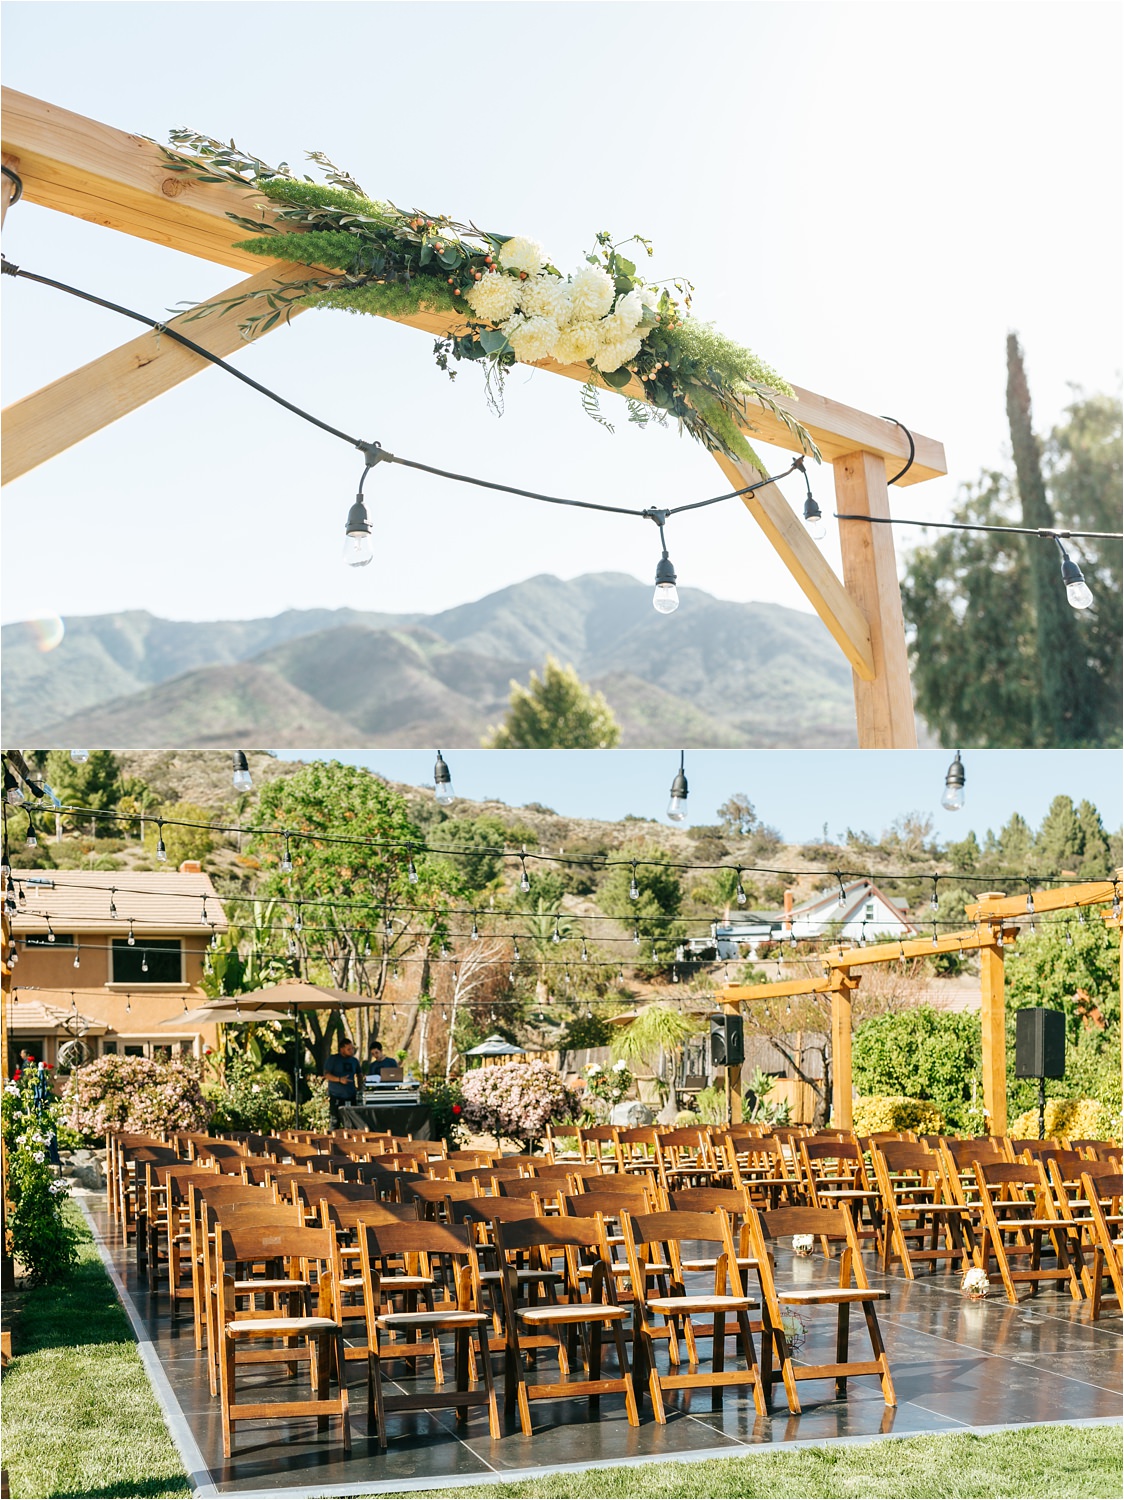 Dreamy backyard wedding details - DIY wedding in California - https://brittneyhannonphotography.com